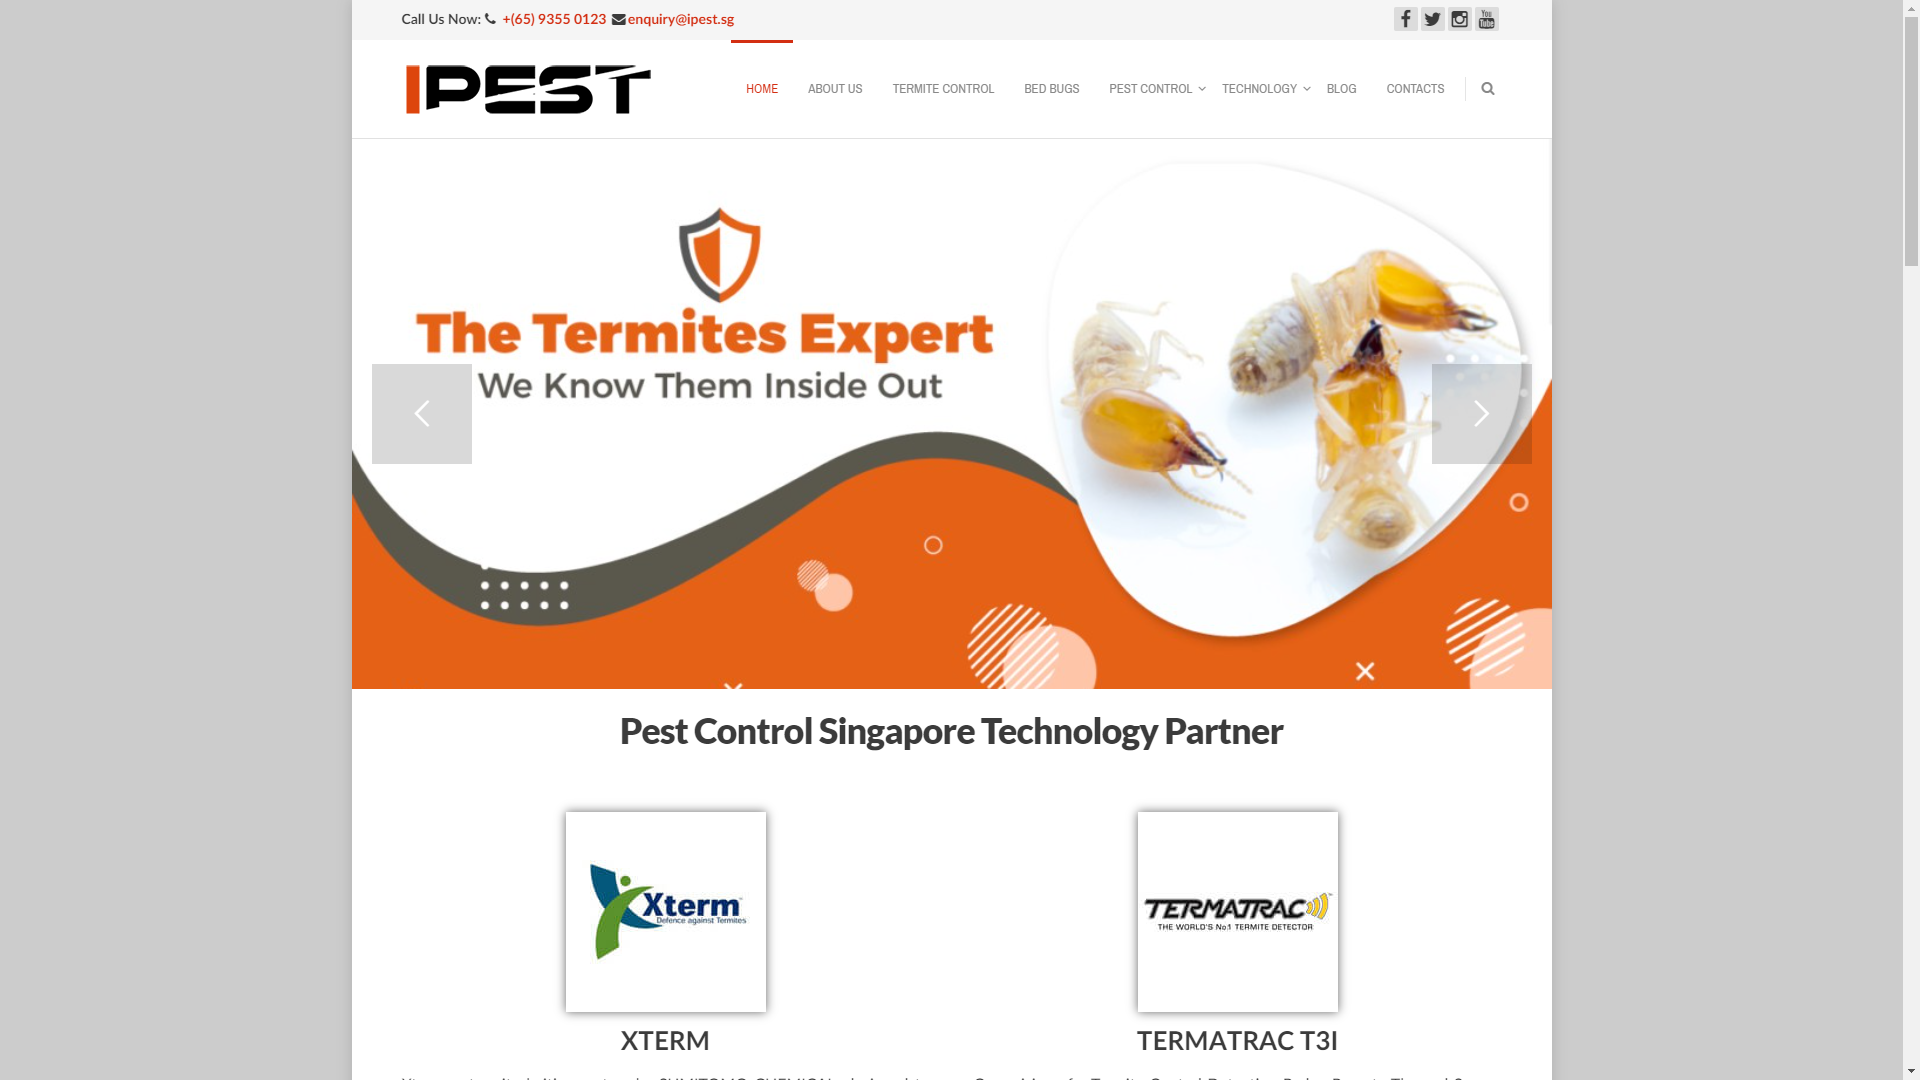 iPest Management pests control Singapore